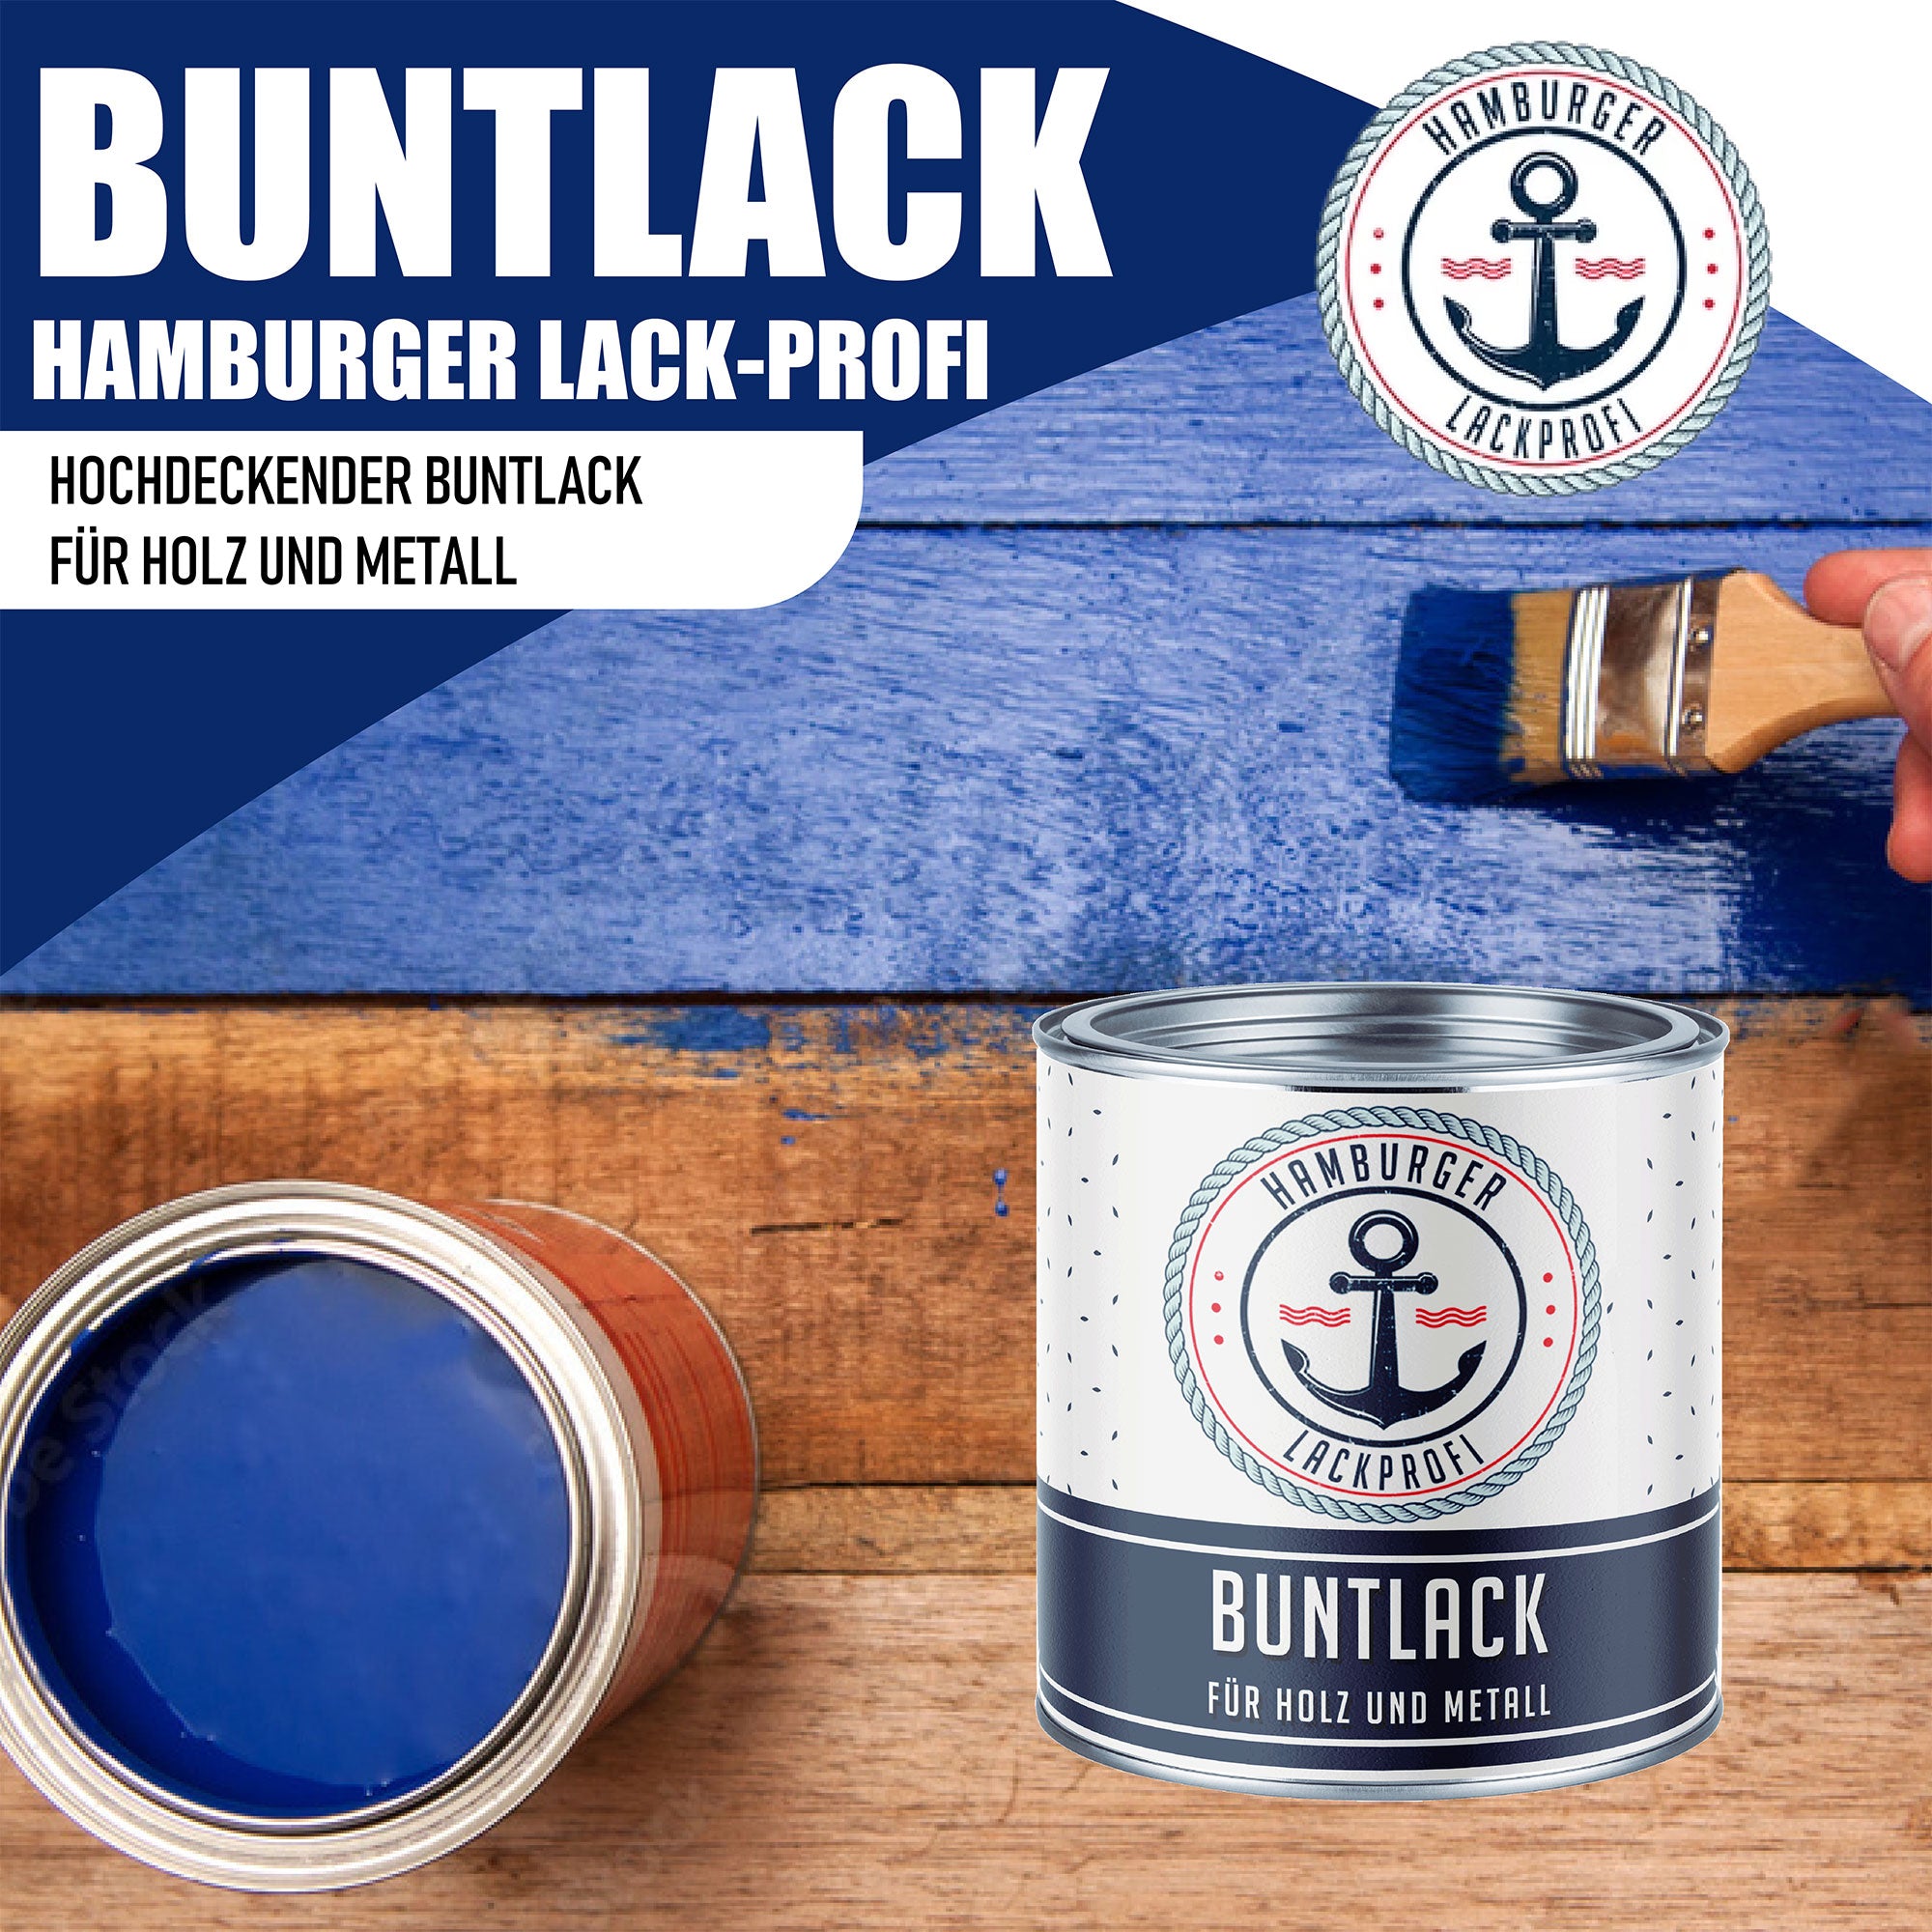 Hamburger Lack-Profi Buntlack Lachsrot RAL 3022 - Robuster Kunstharzlack